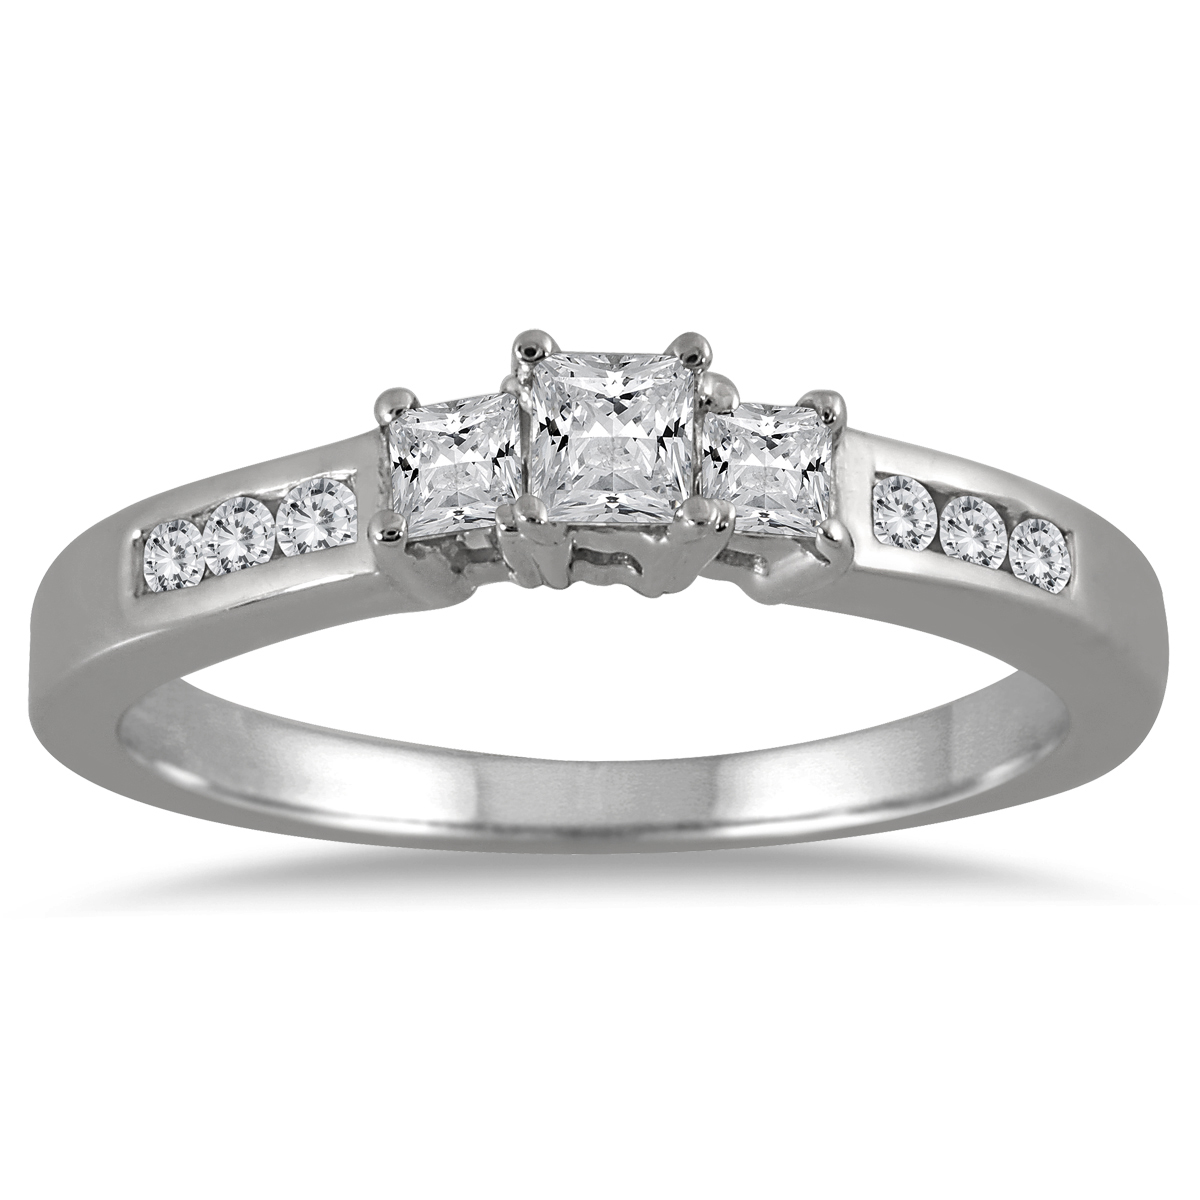 szul.com 1/2 Carat TW Princess Cut Diamond Three Stone Ring in 10K White Gold